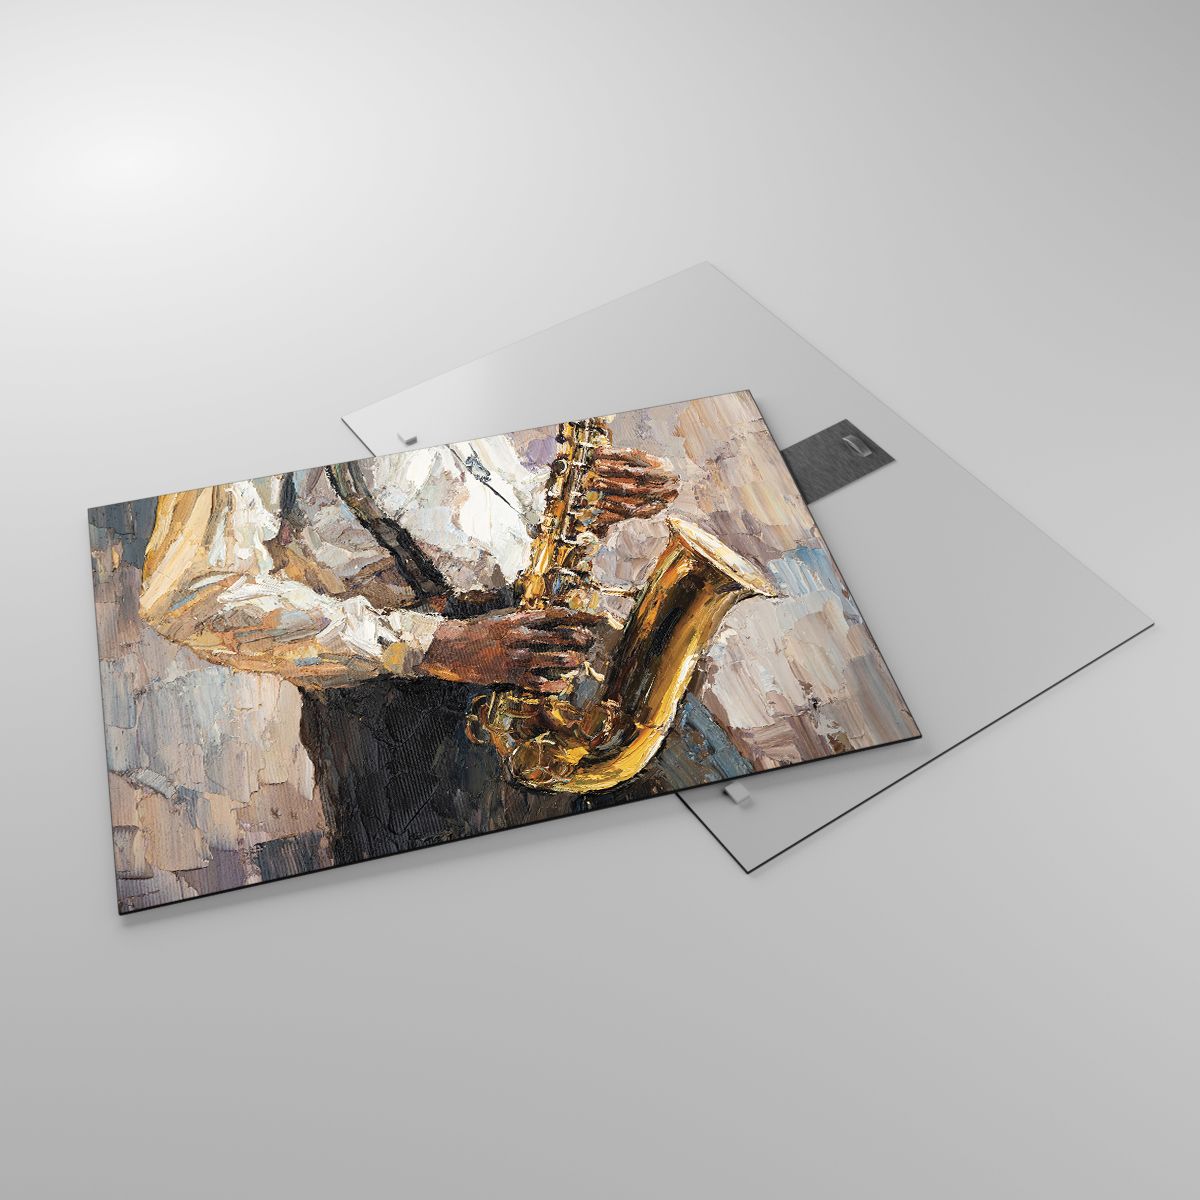 Glasbild Saxophon, Glasbild Musik, Glasbild Malerei, Glasbild Jazz, Glasbild Kultur